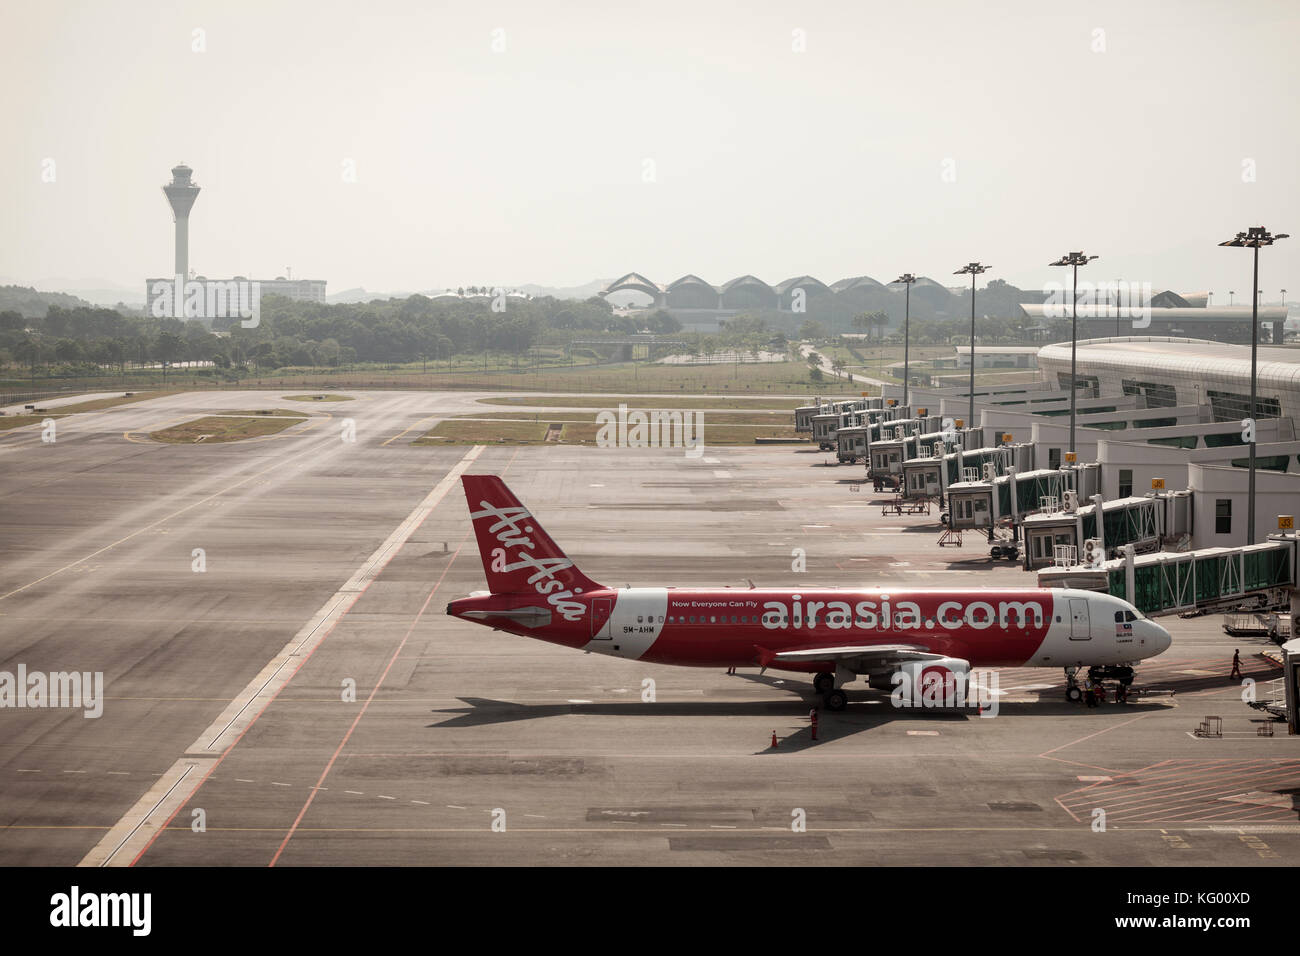 An AirAsia Bhd. A320 aircraft stands on the tarmac at Kuala Lumpur International Airport 2 (KLIA2) in Sepang, Selangor, Malaysia Stock Photo